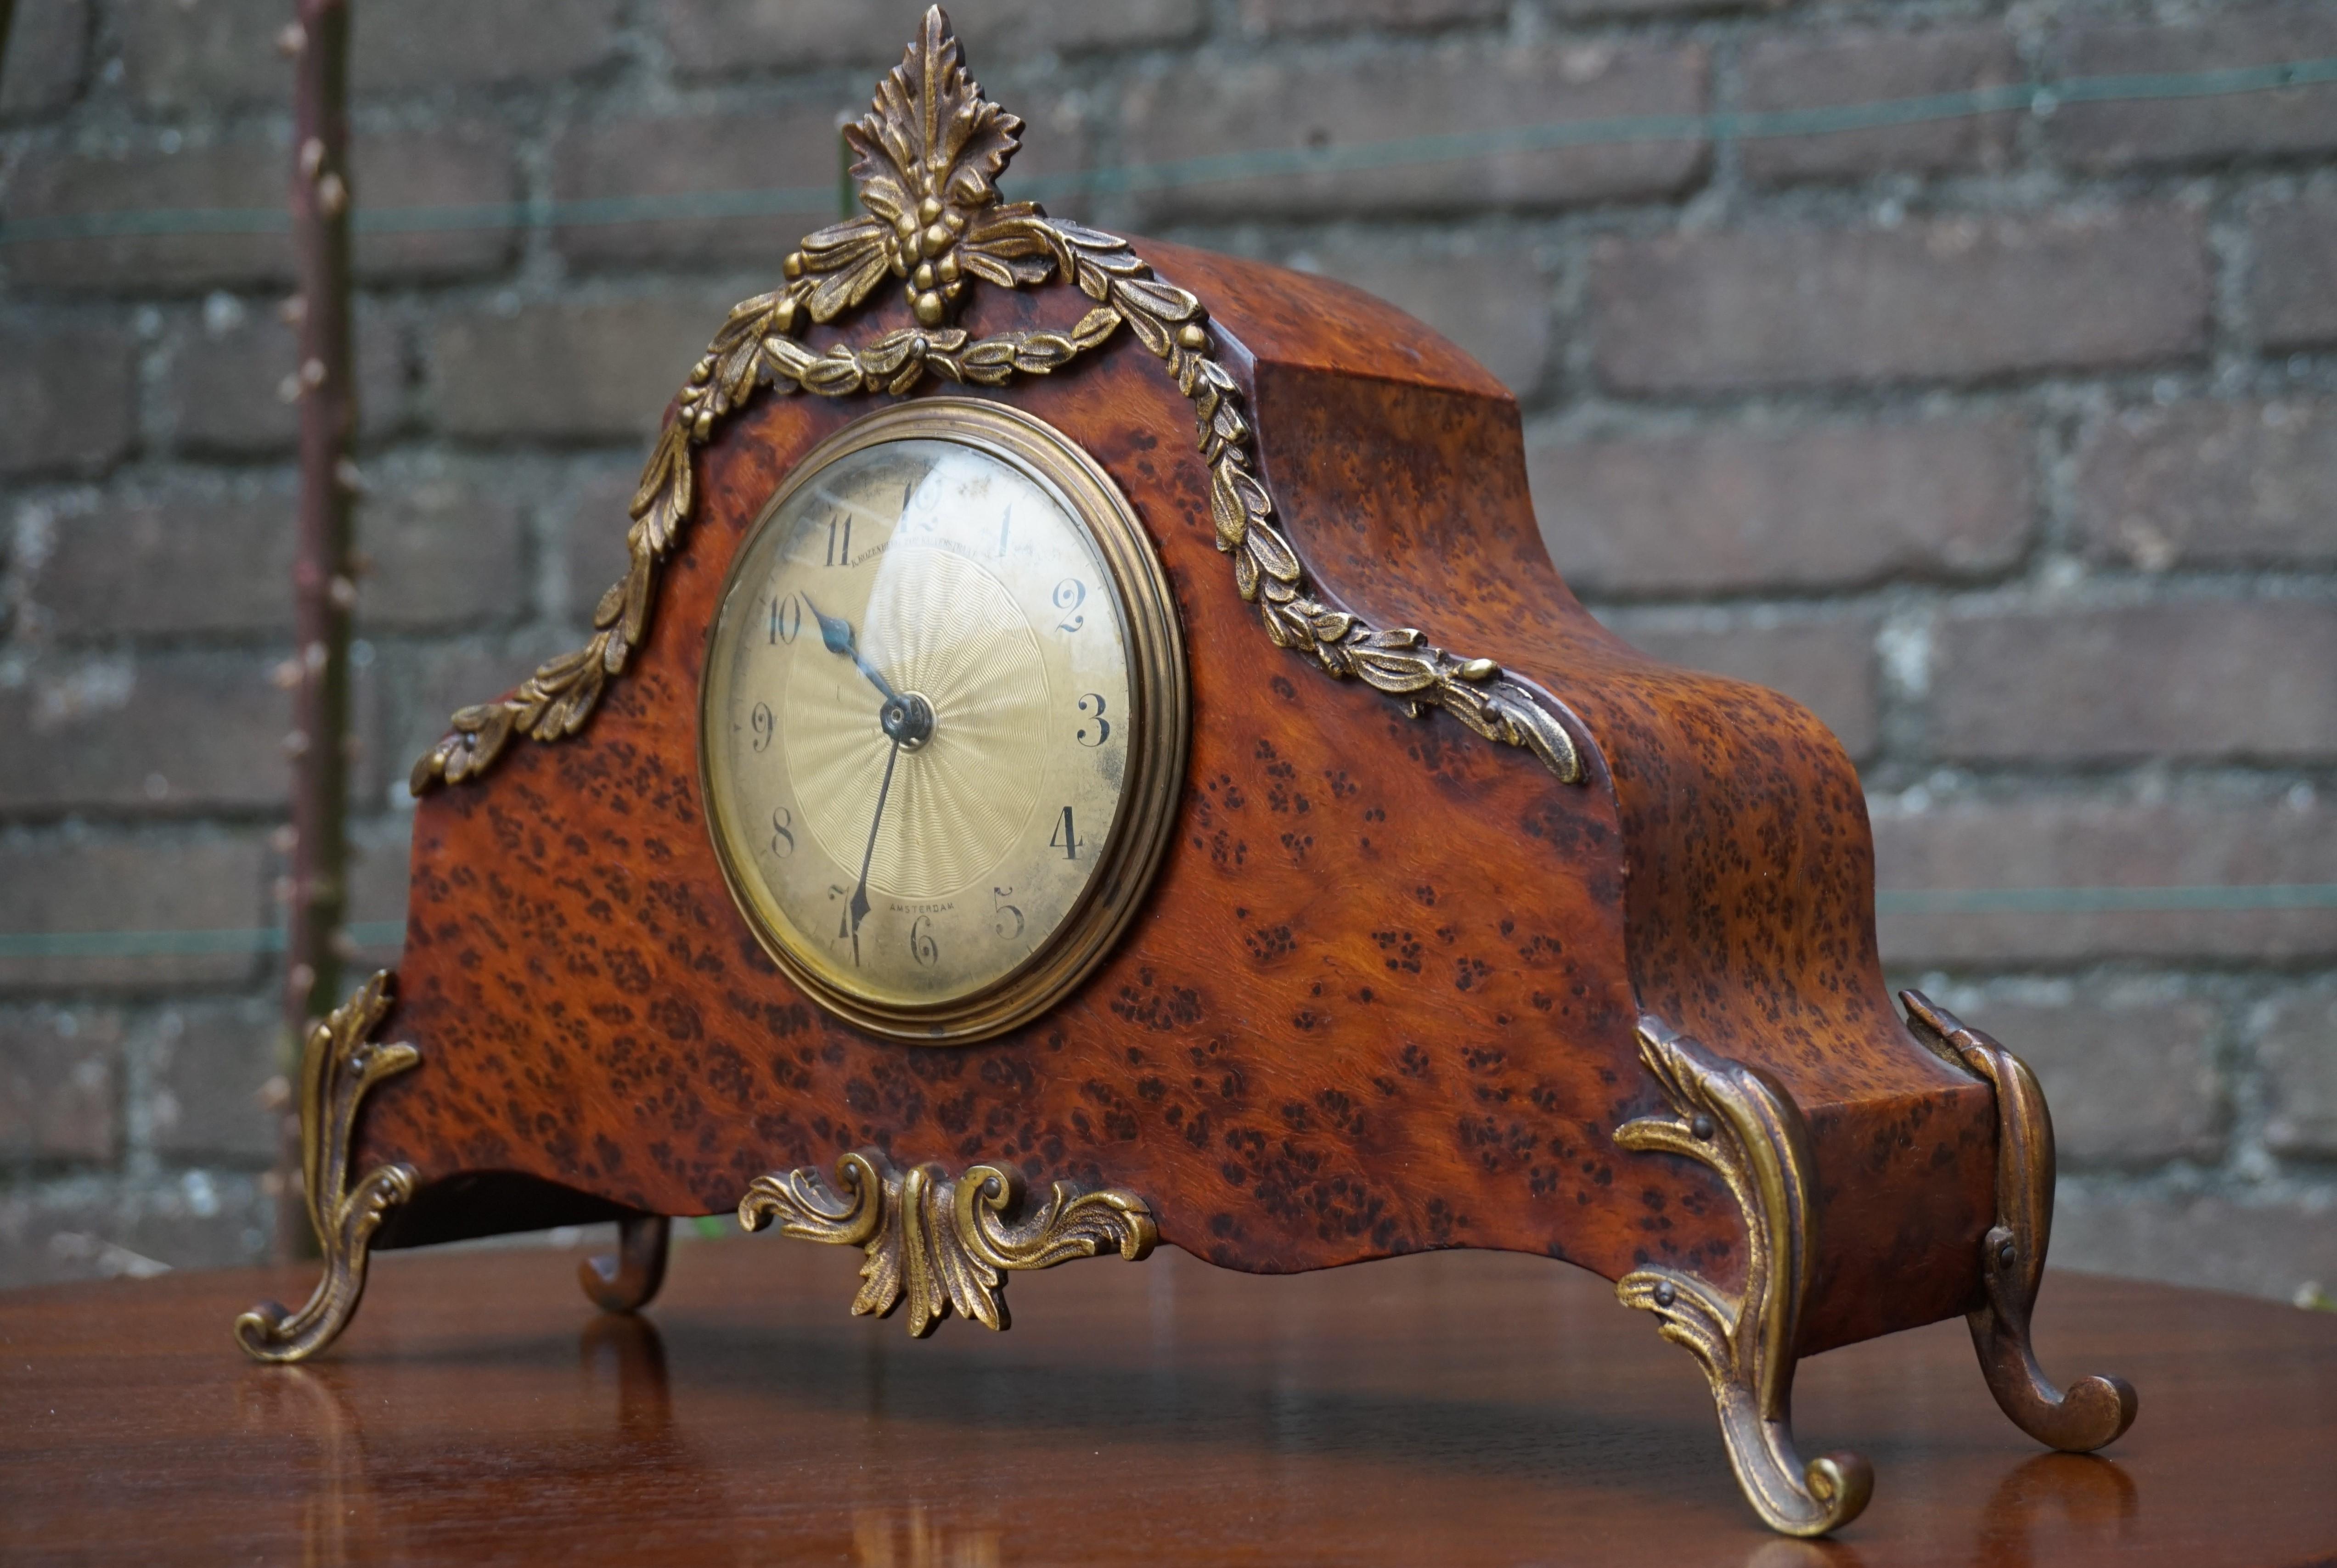 Stunning Burl Walnut Table or Mantel Clock with Stylish Bronze Feet & Ornaments 8